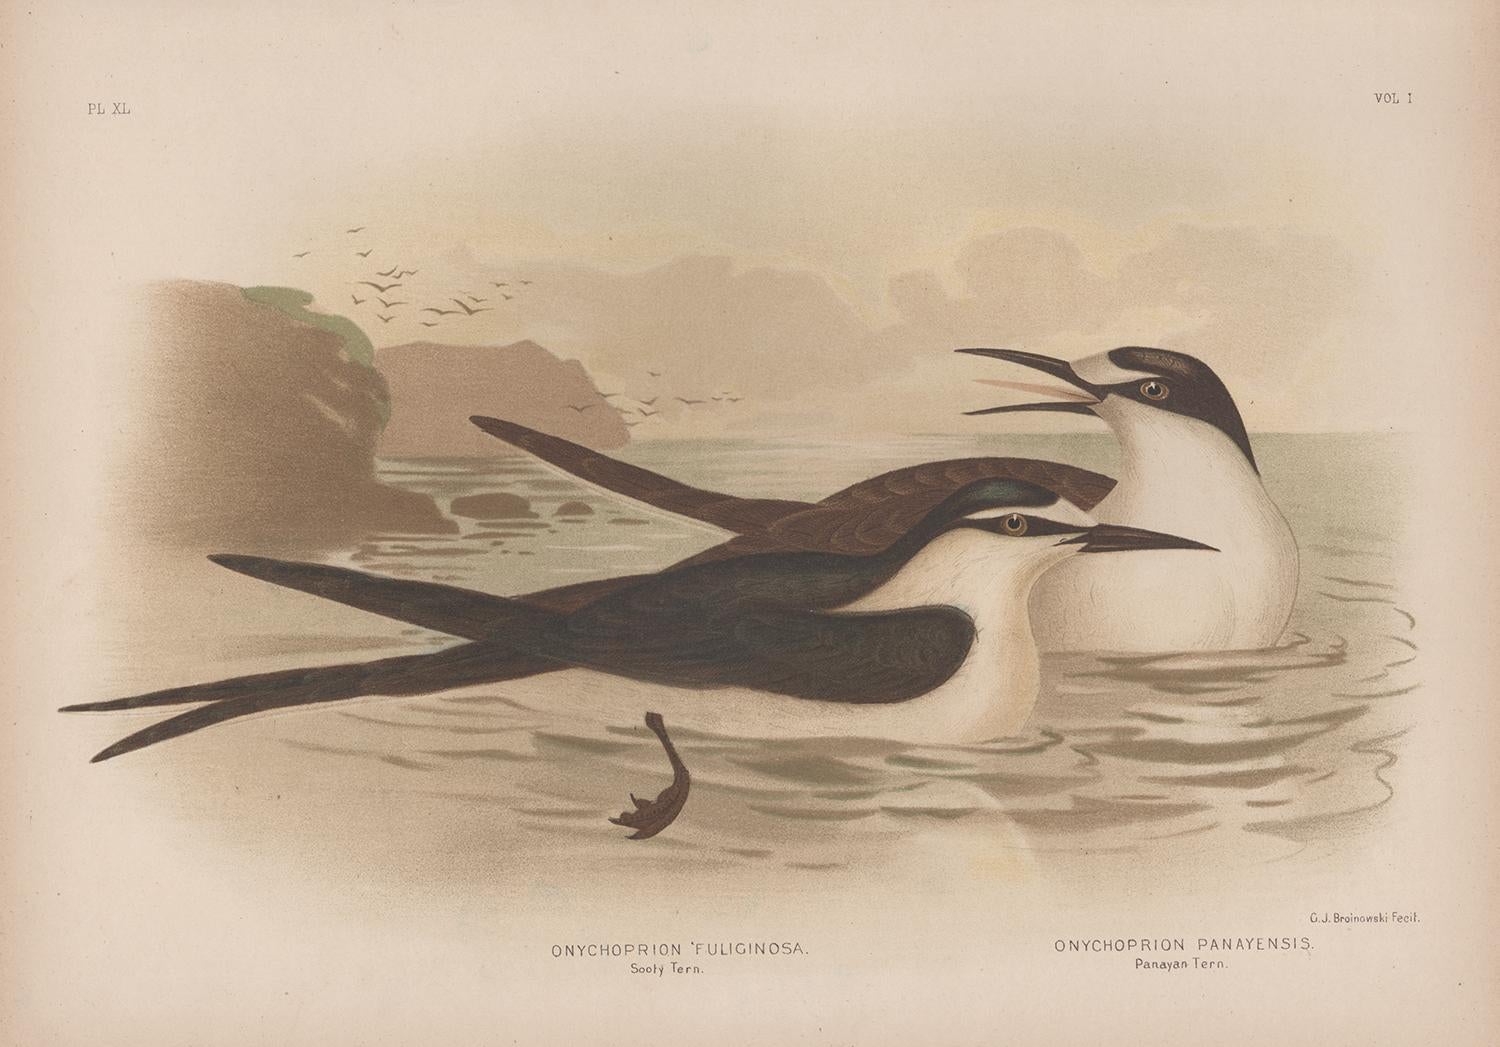 Sooty Tern and Panayan Tern, antique sea bird chromolithograph print, 1889